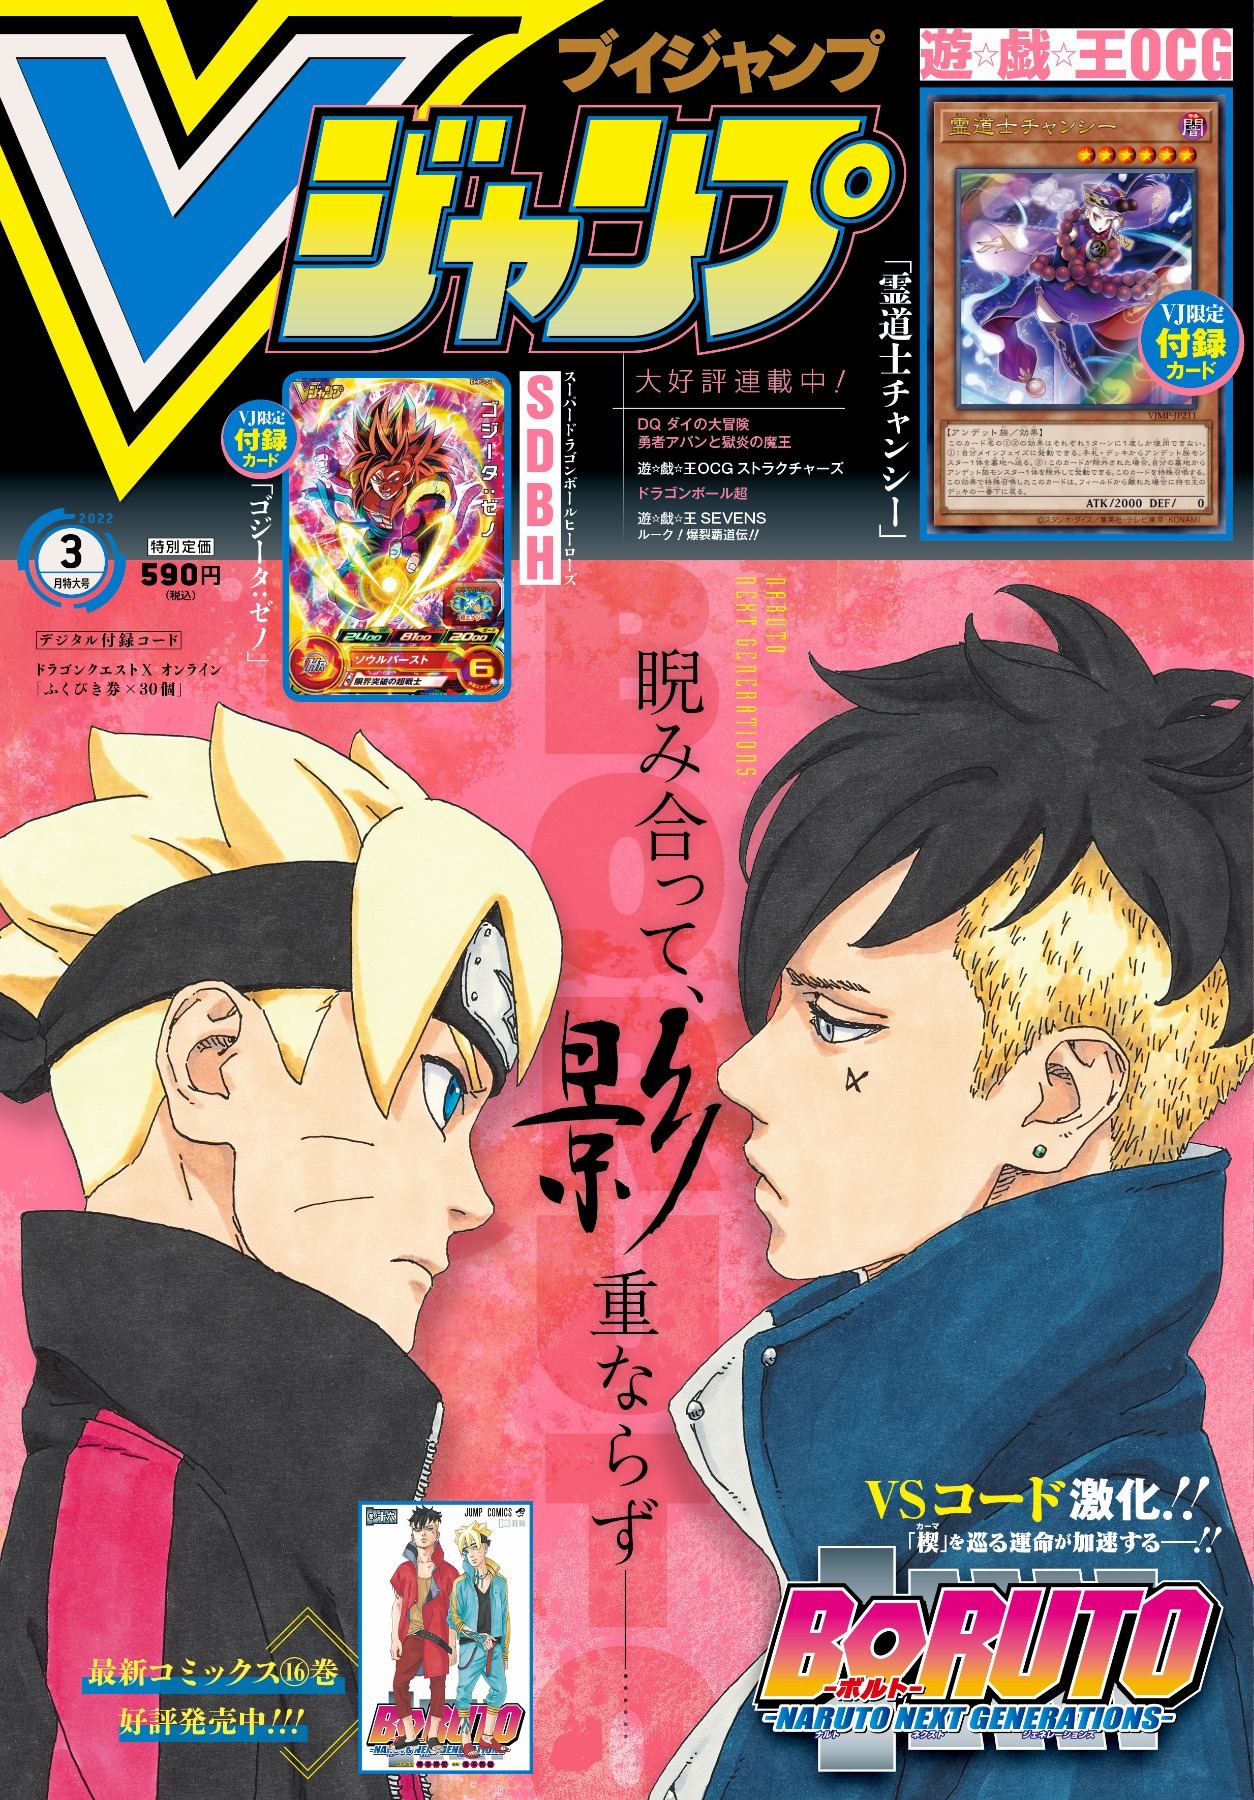 V JUMP Mar 2022 Japanese Magazine Yu Gi Oh OCG Dragon Ball Super BORUTO 